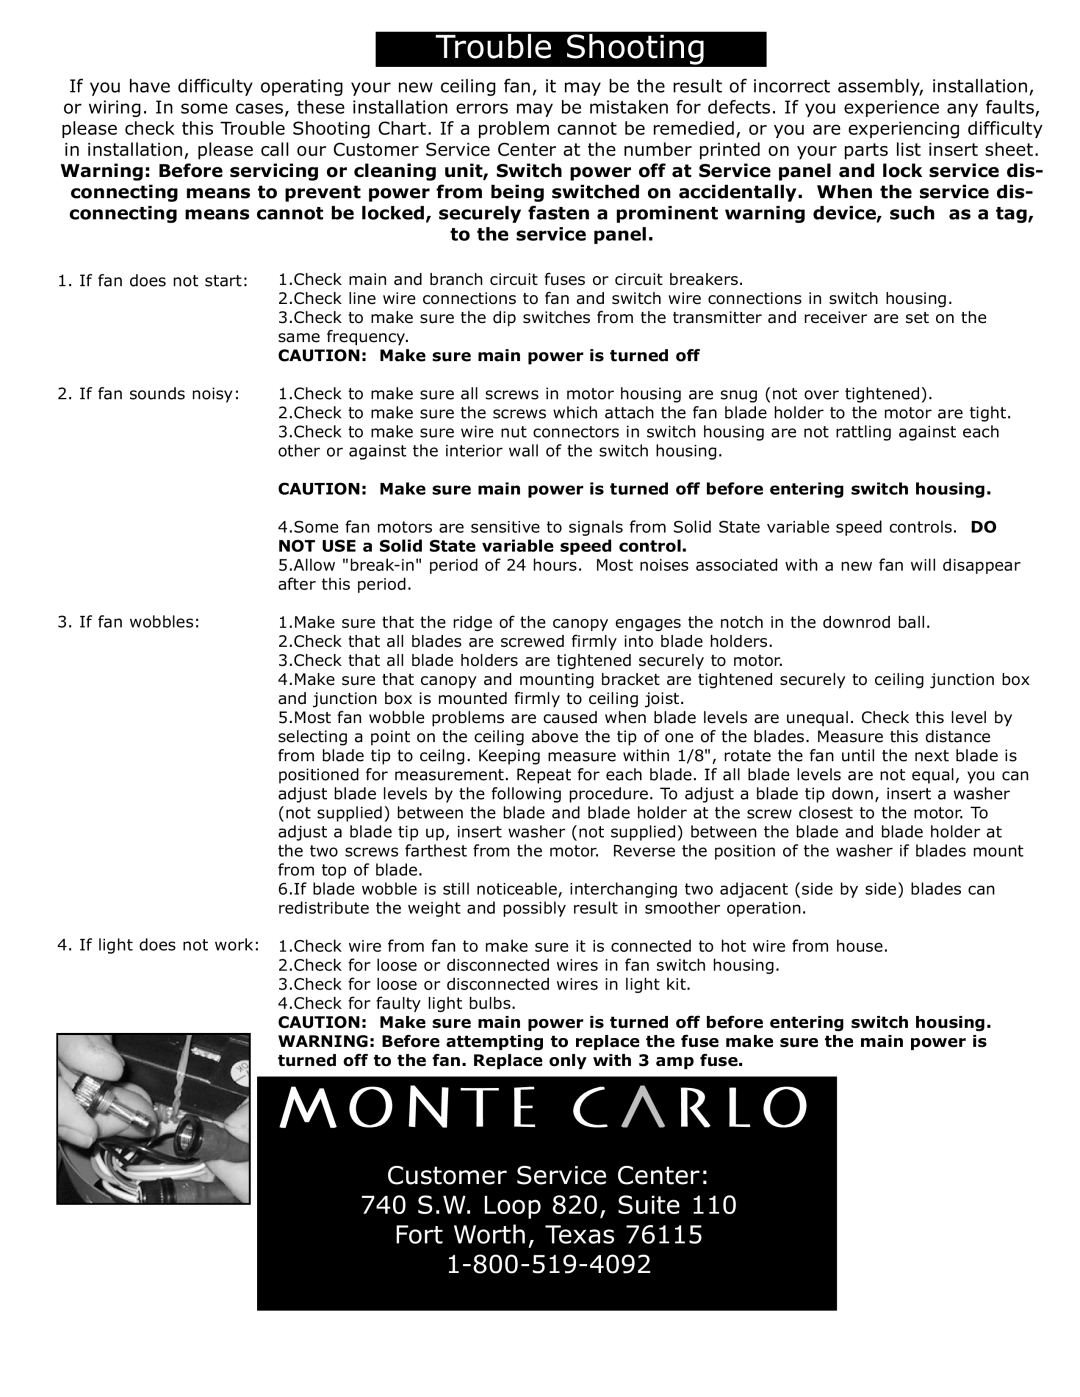 Monte Carlo Fan Company 5DOR52 owner manual Customer Service Center 740 S.W. Loop 820, Suite 